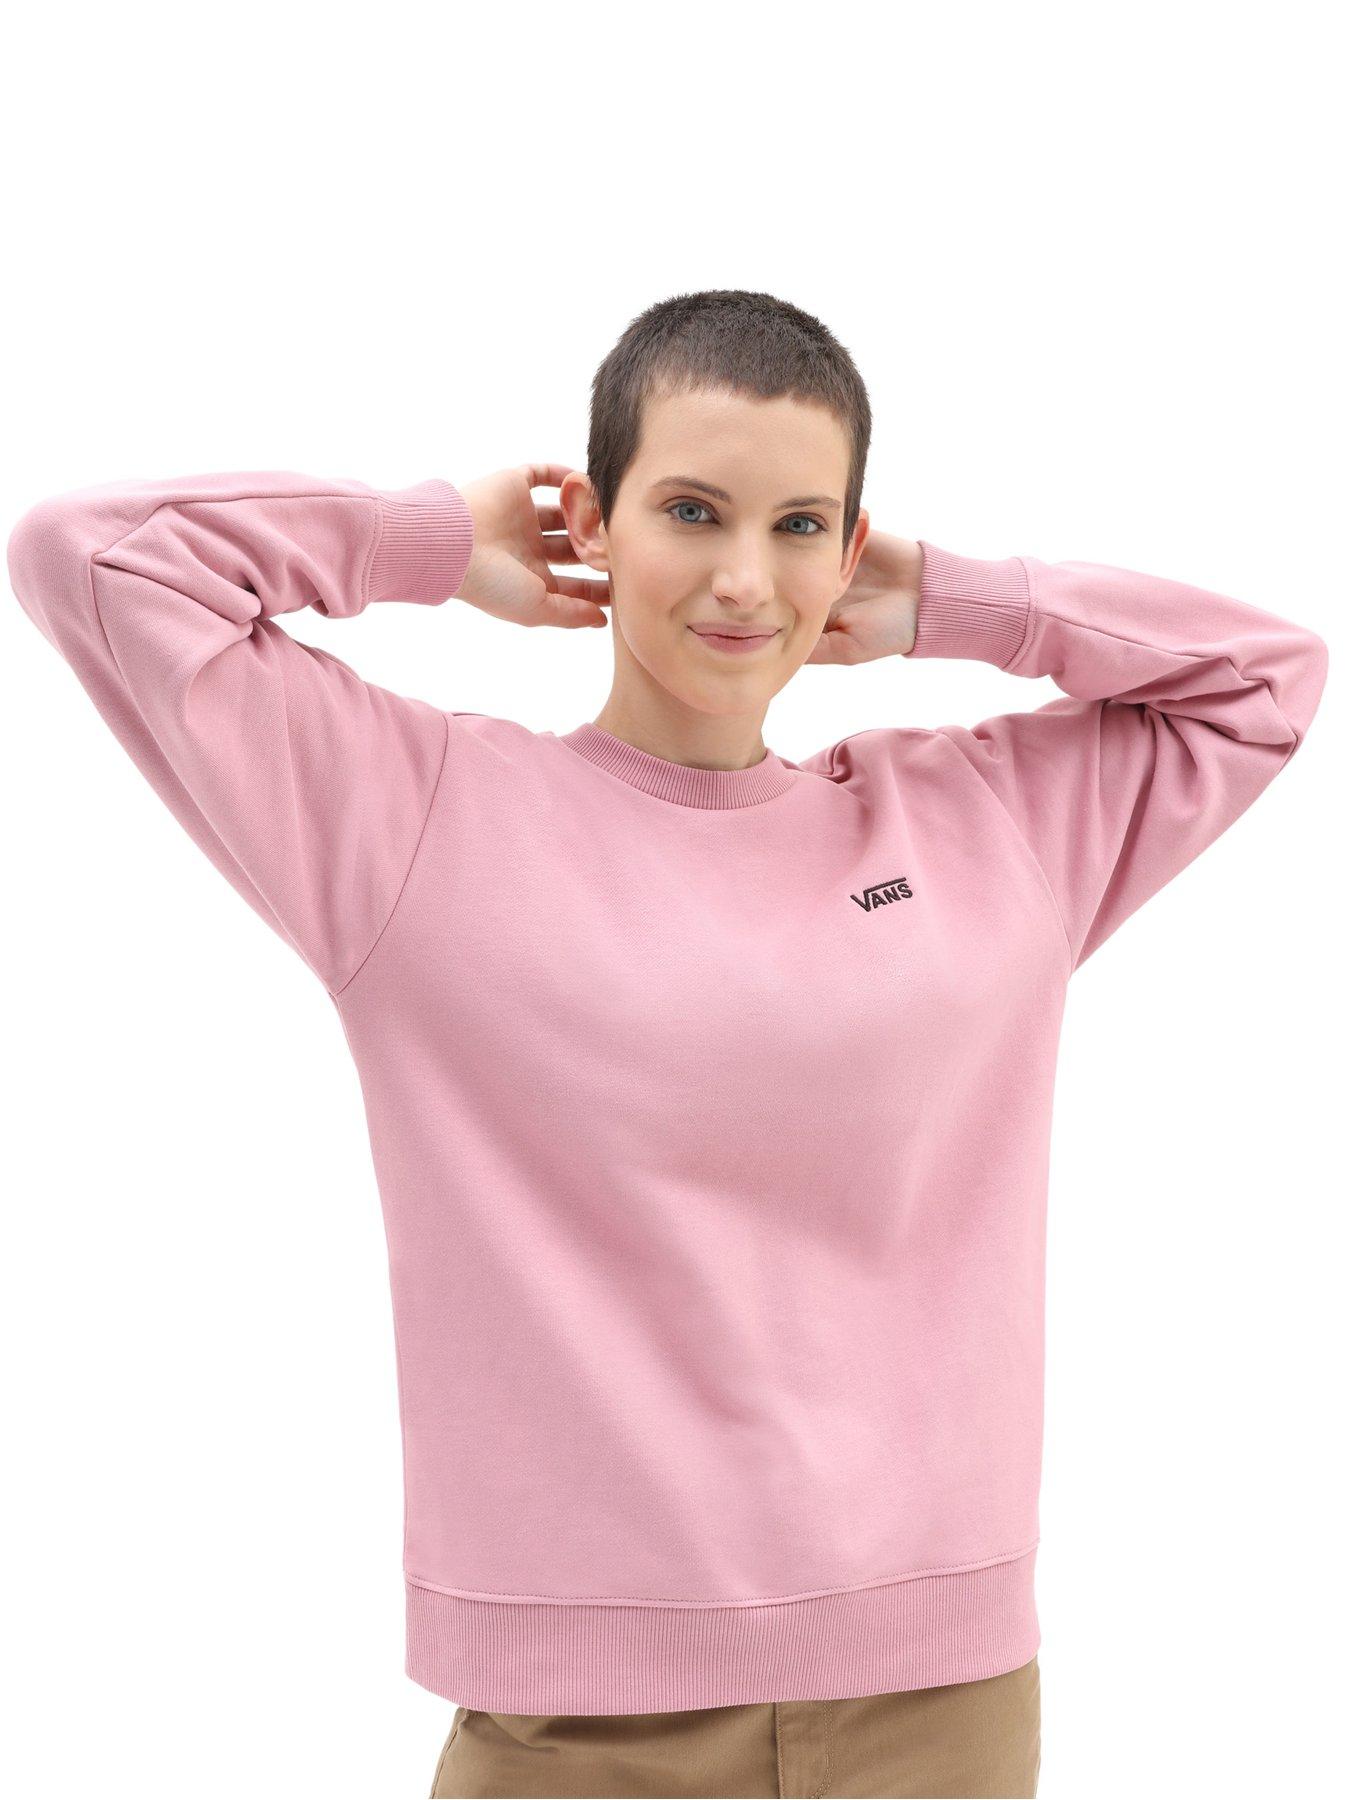 WOMEN FASHION Jumpers & Sweatshirts Hoodless discount 75% Pink XS Carhartt sweatshirt 